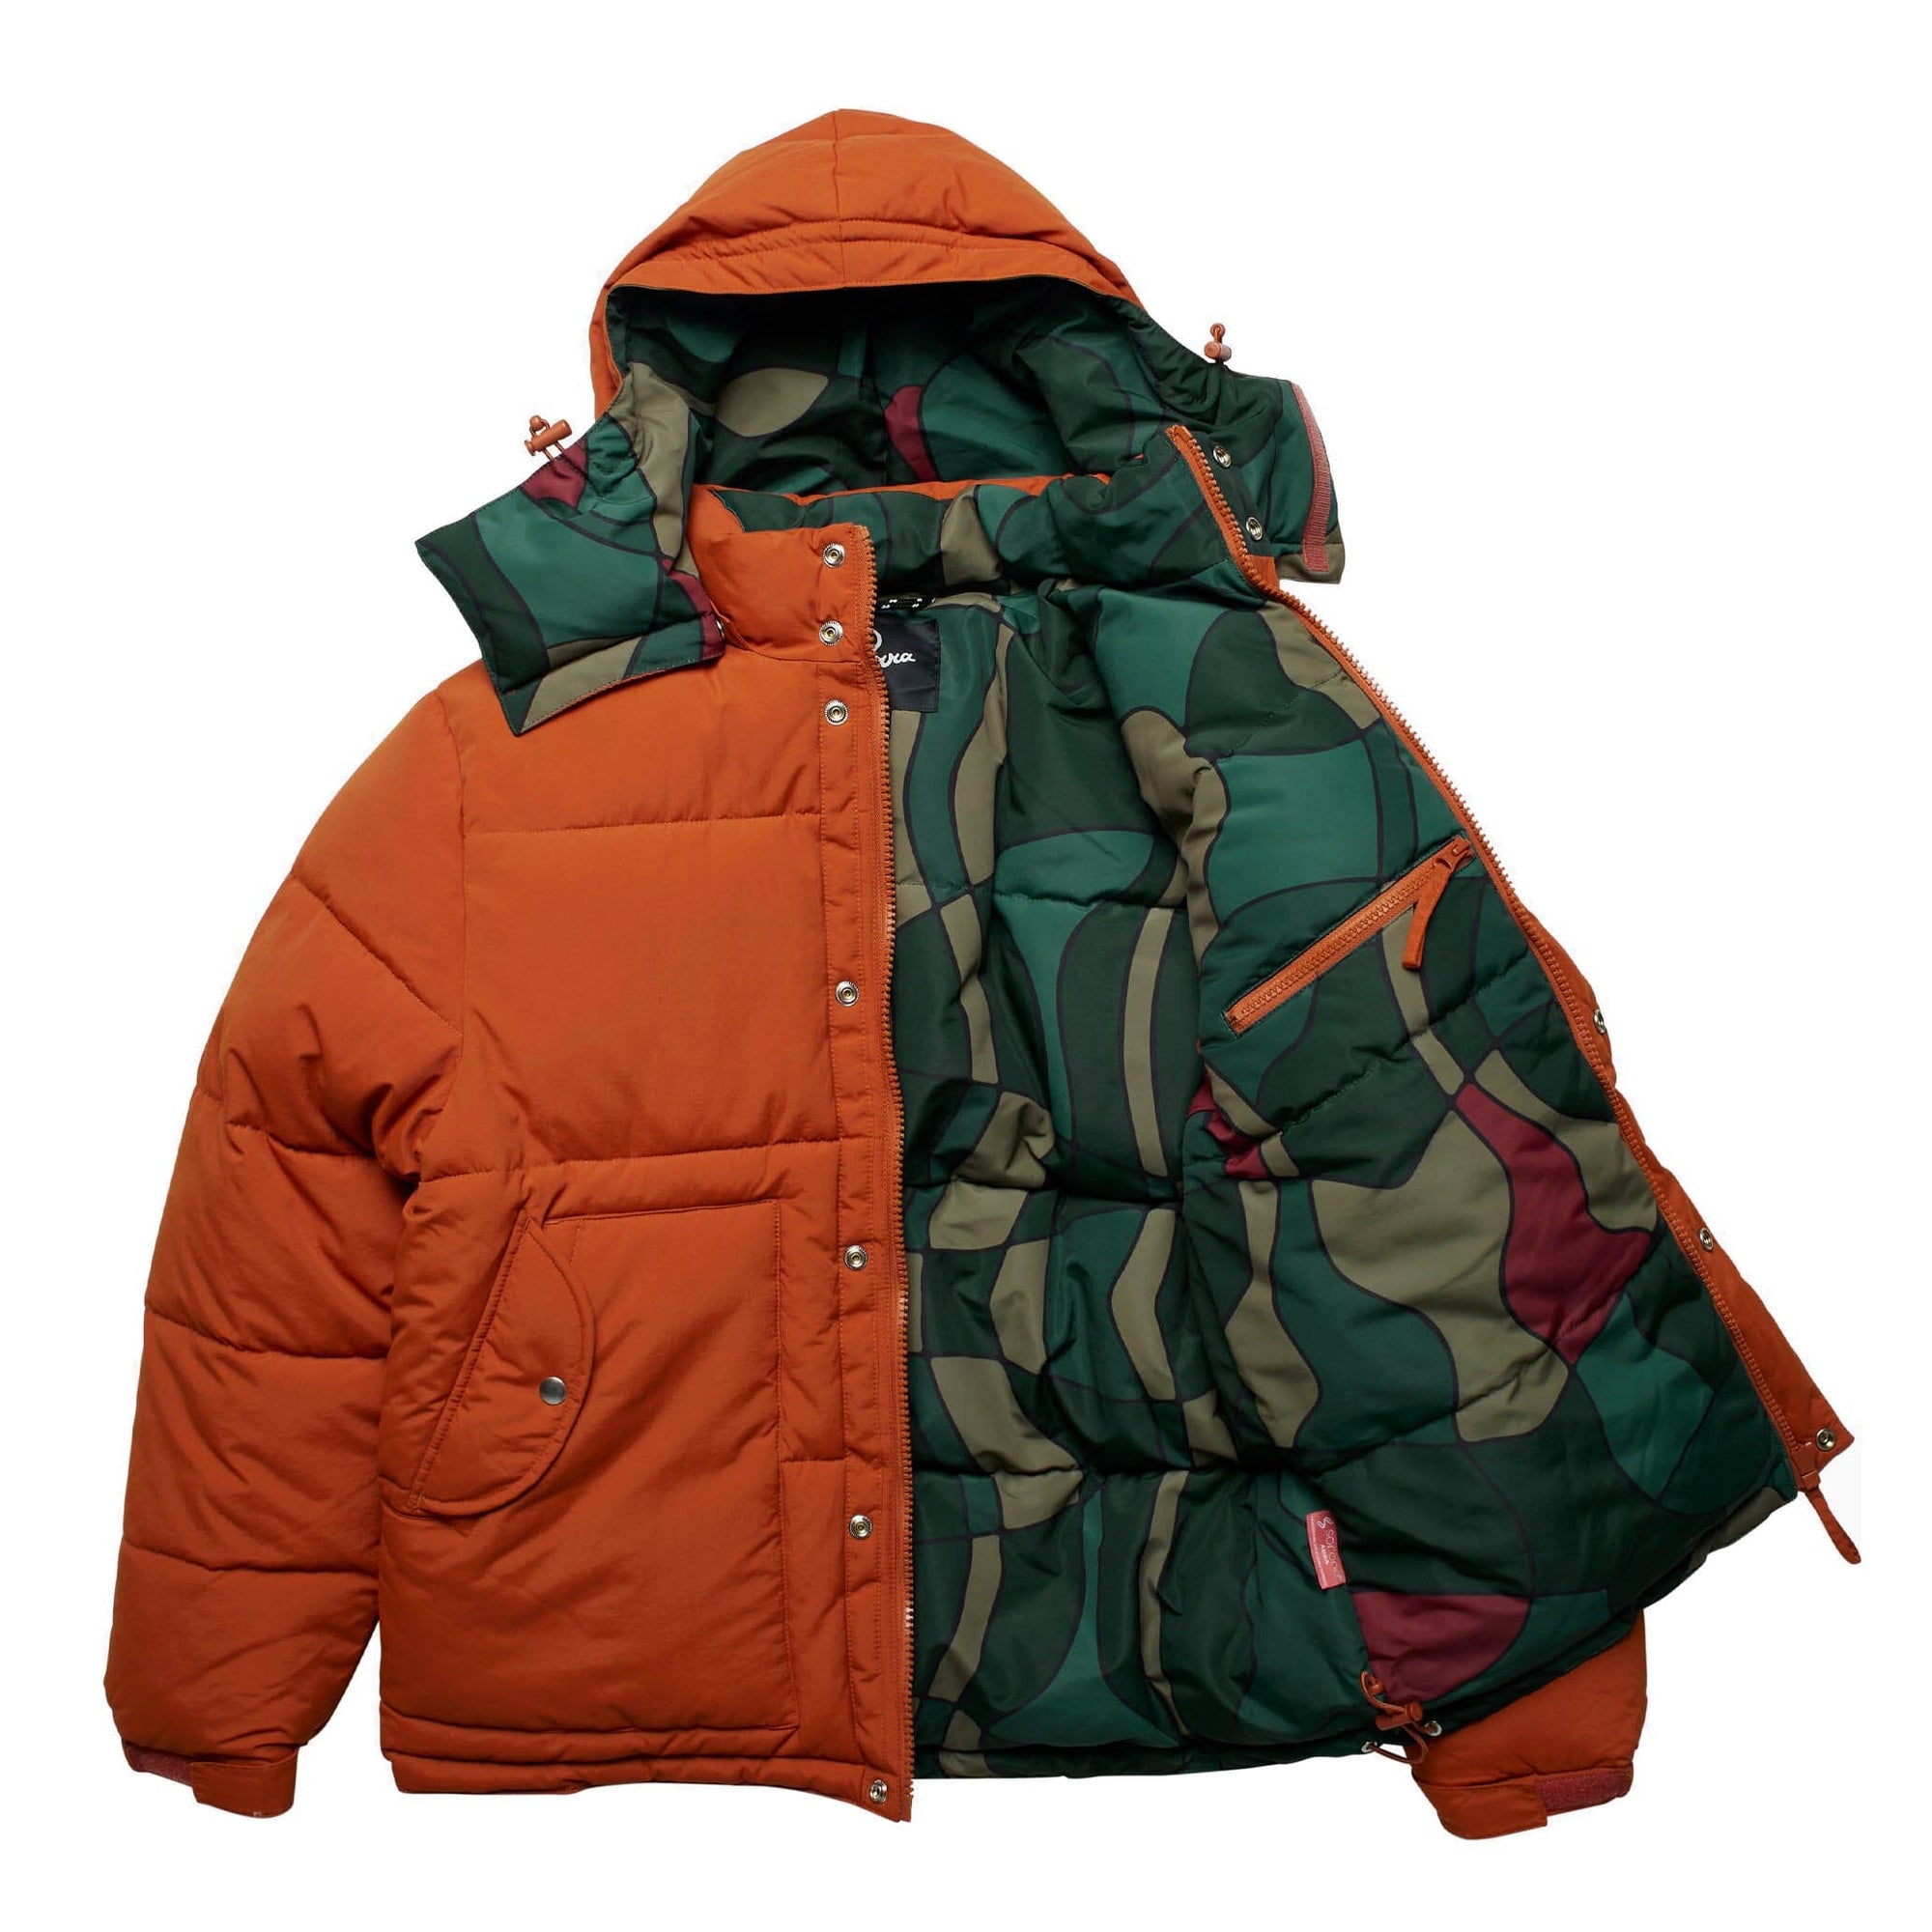 by Parra Trees in Wind Puffer Jacket Sienna Orange jackets by Parra 